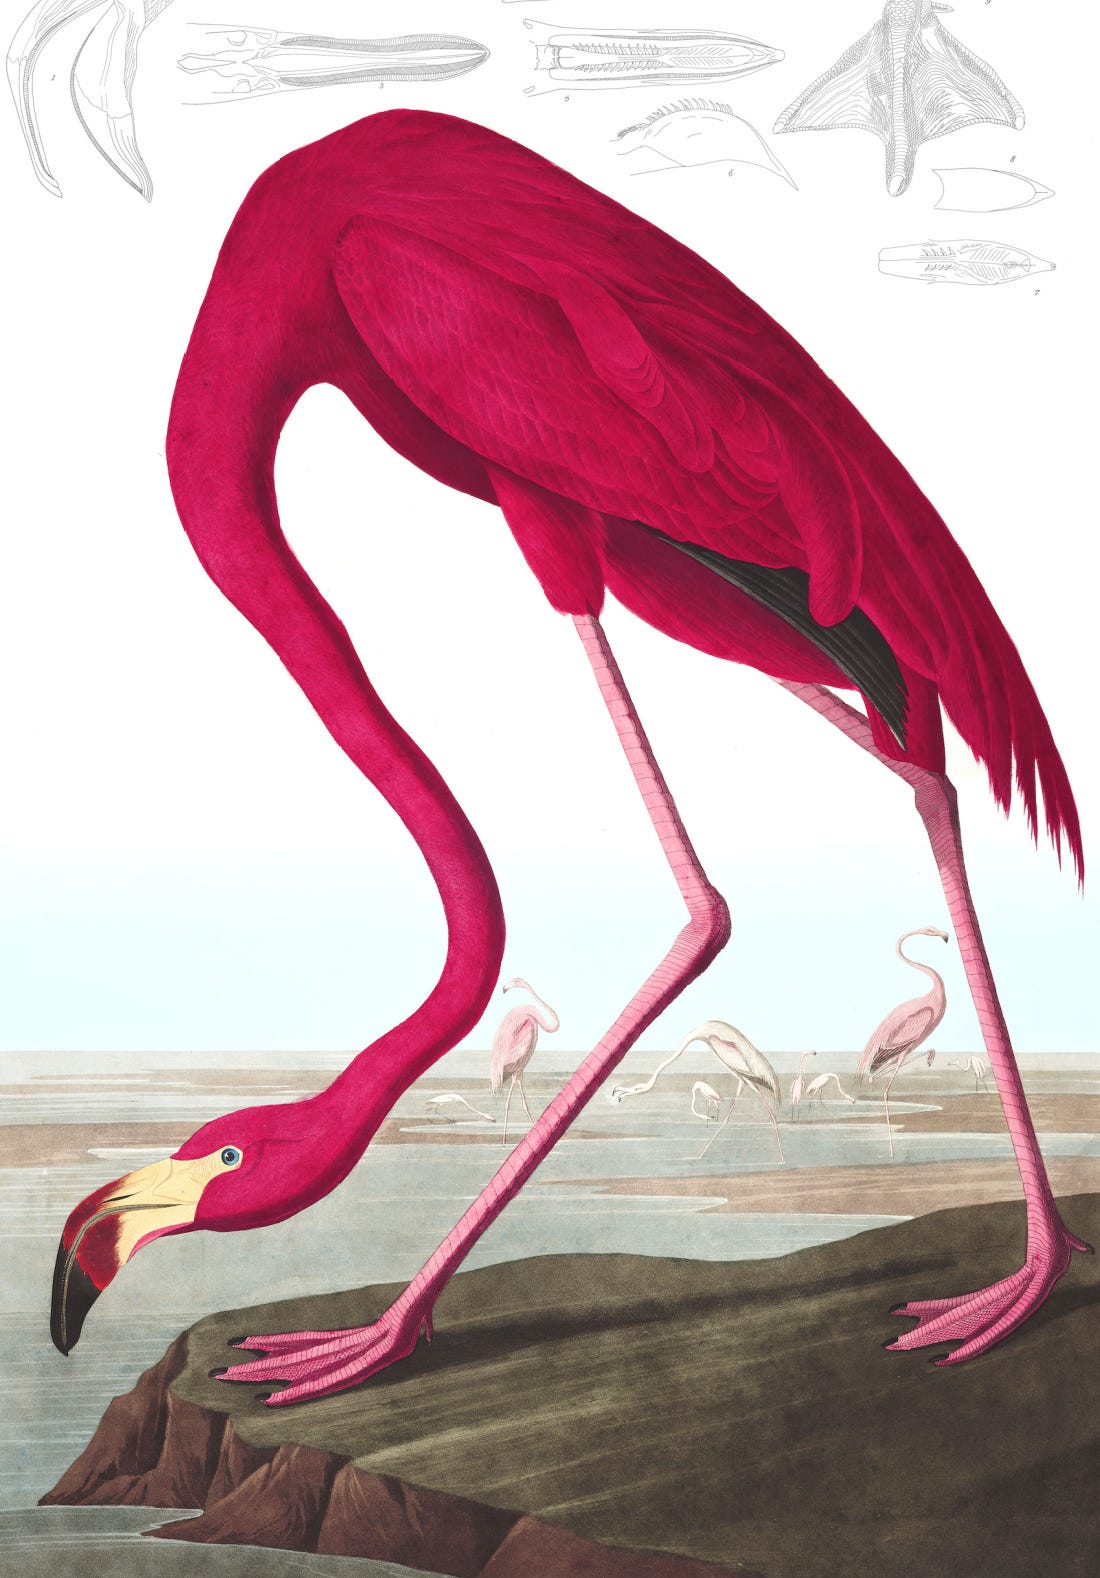 american flamingo